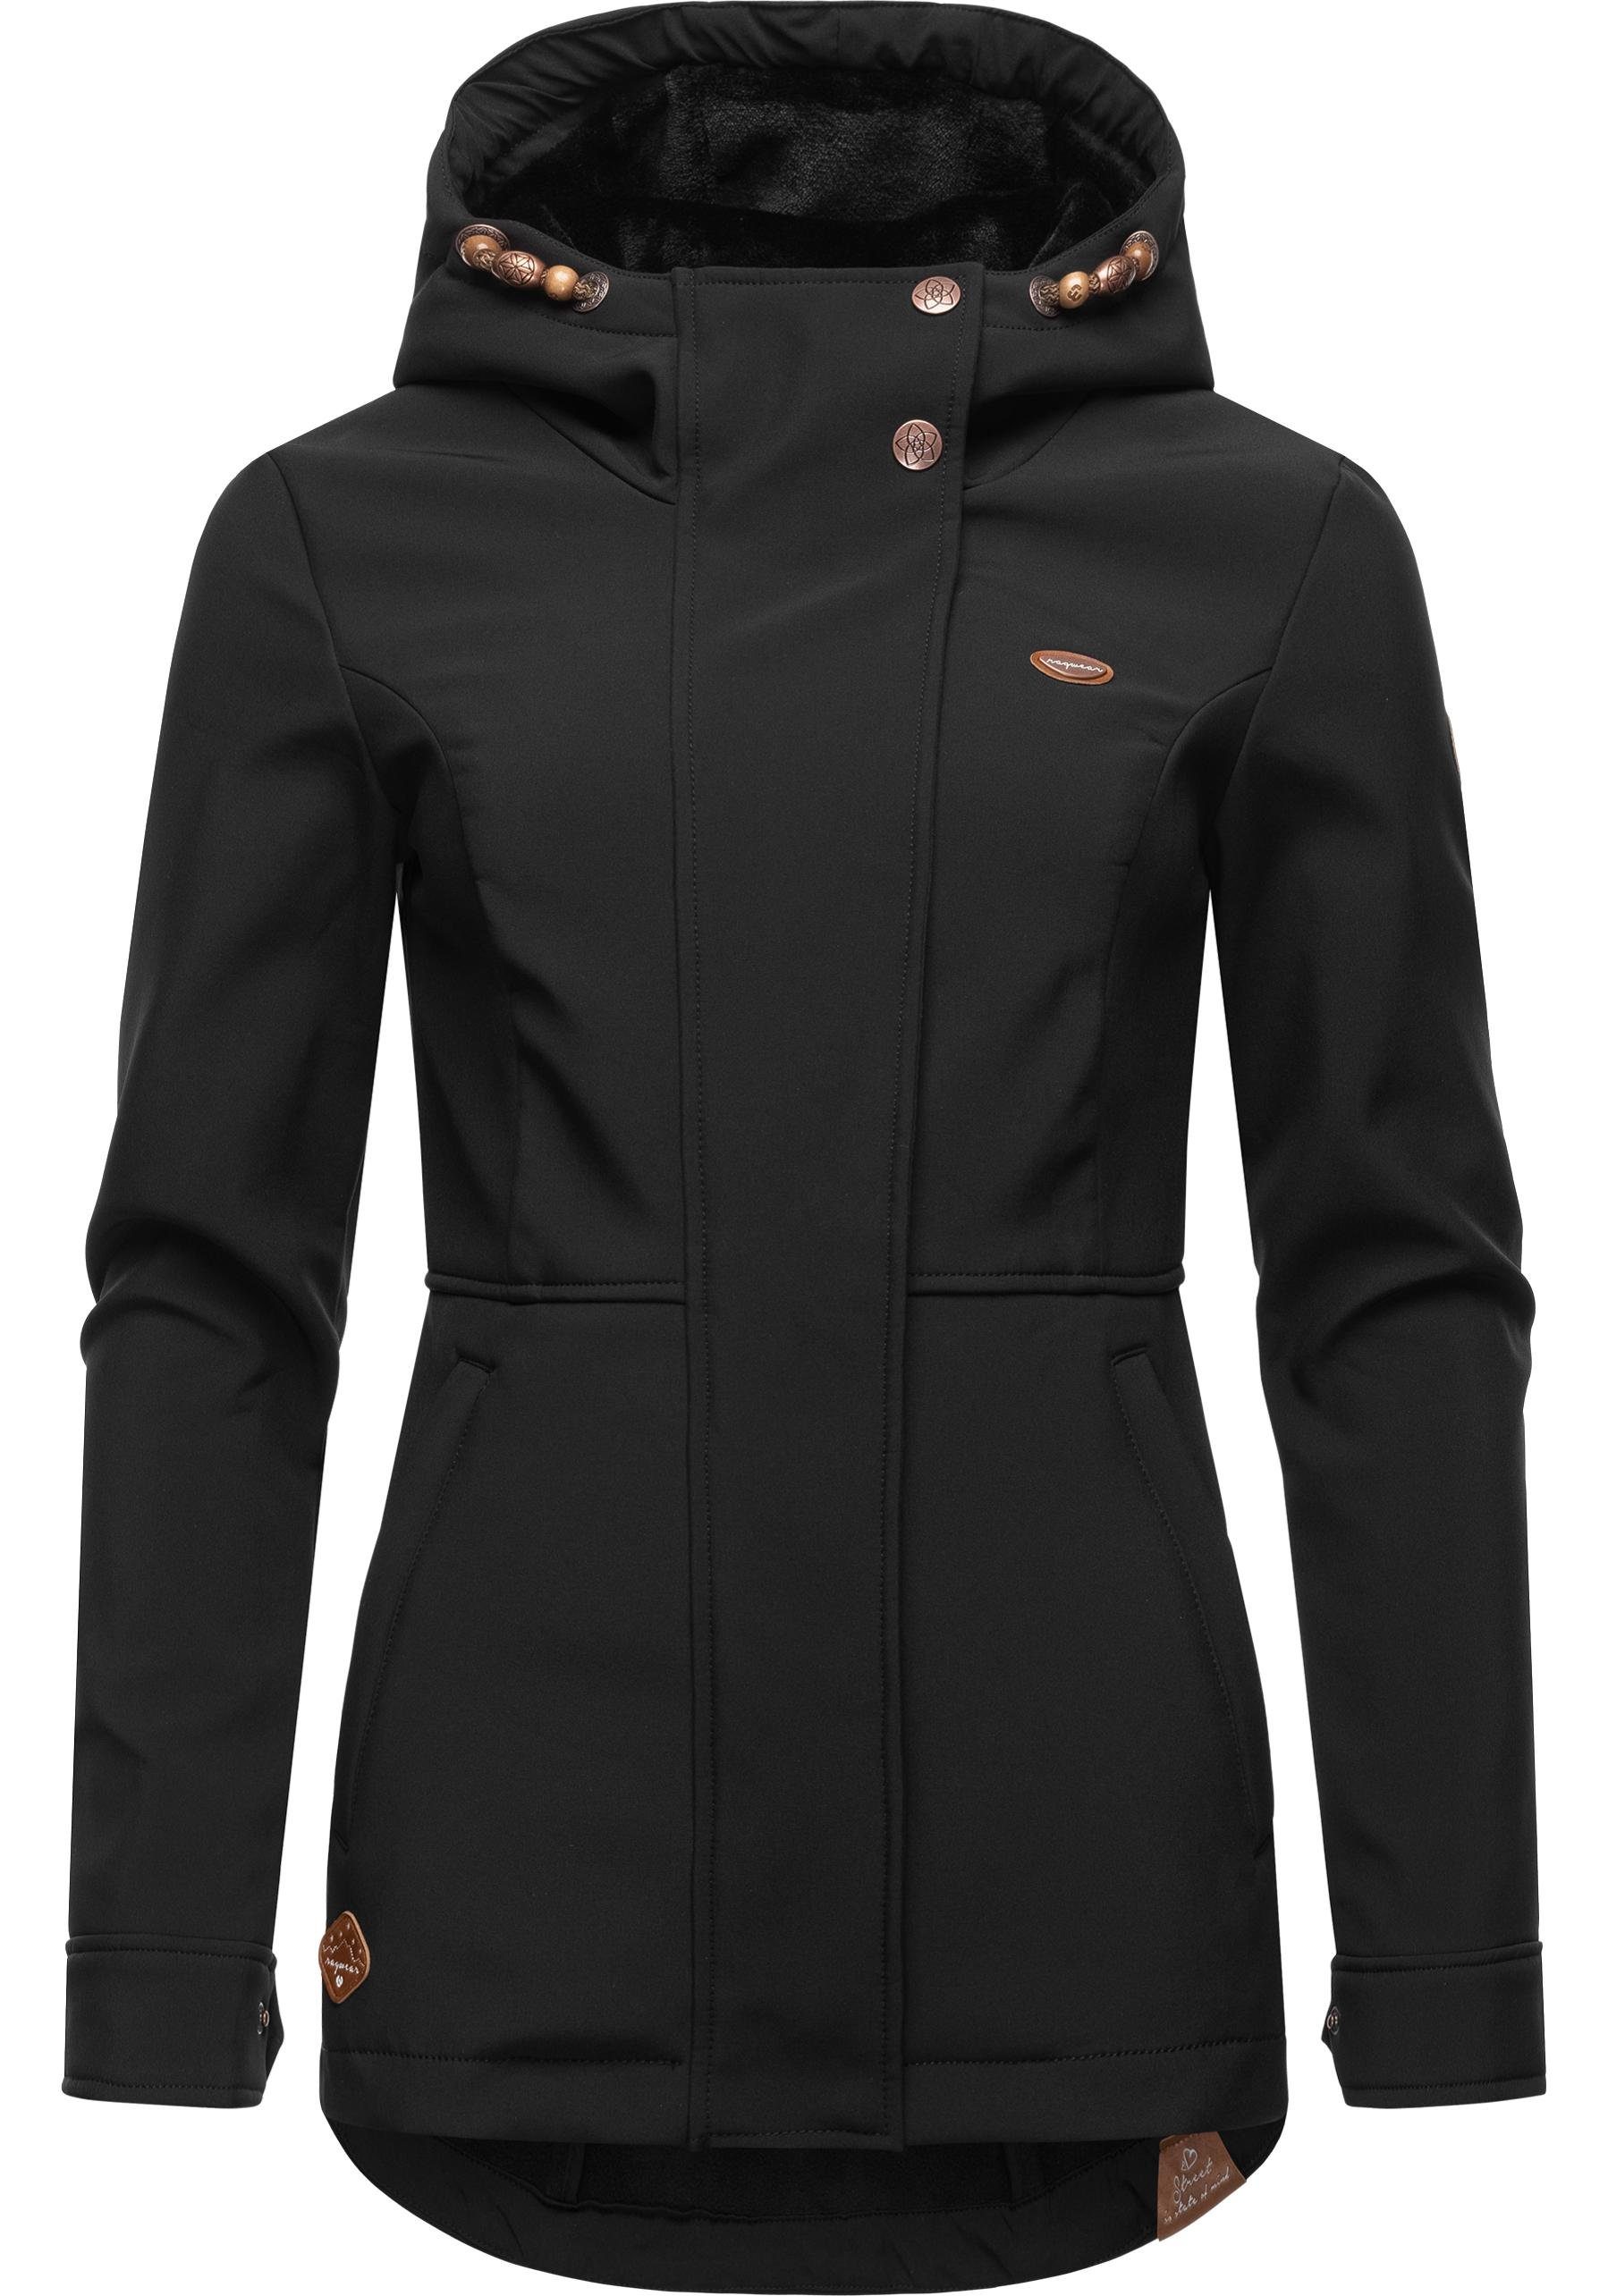 Ragwear Softshelljacke Yba sportliche Damen Outdoorjacke mit Kapuze schwarz | Übergangsjacken